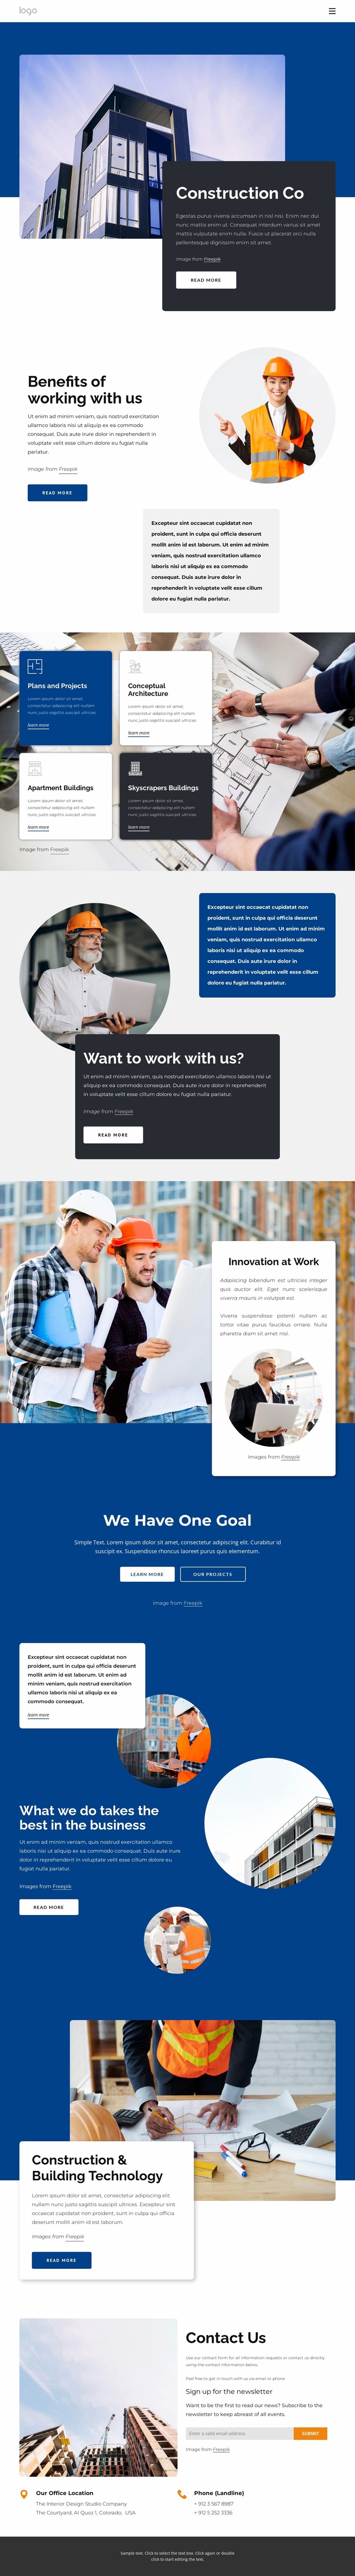 Construction co Website Mockup